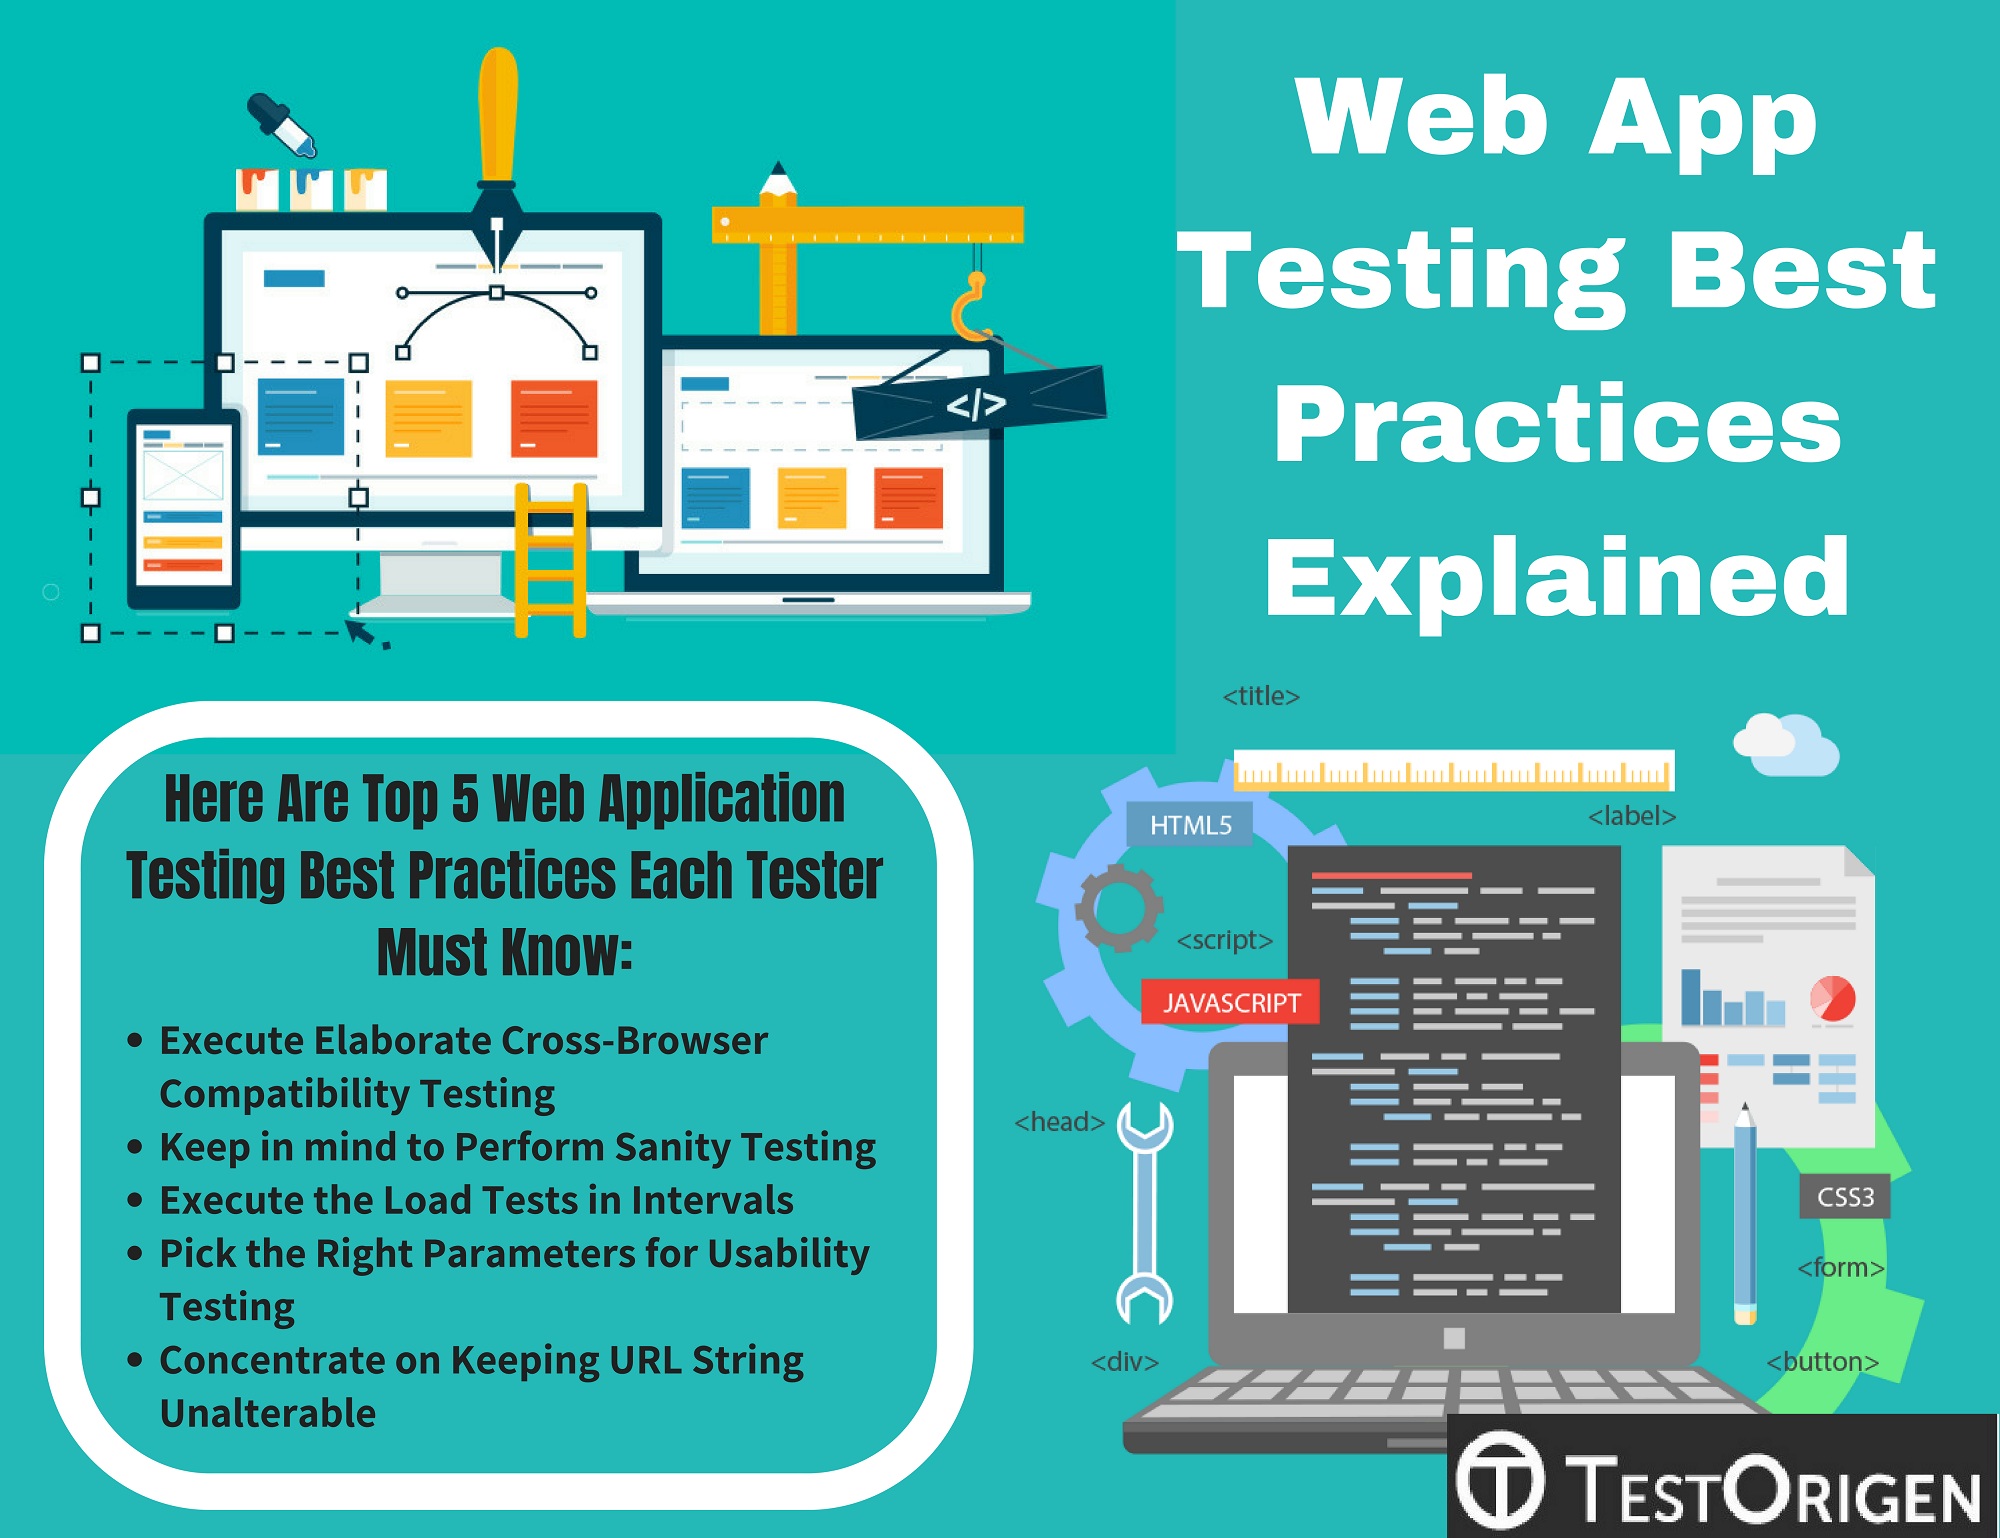 Web App Testing Best Practices Explained